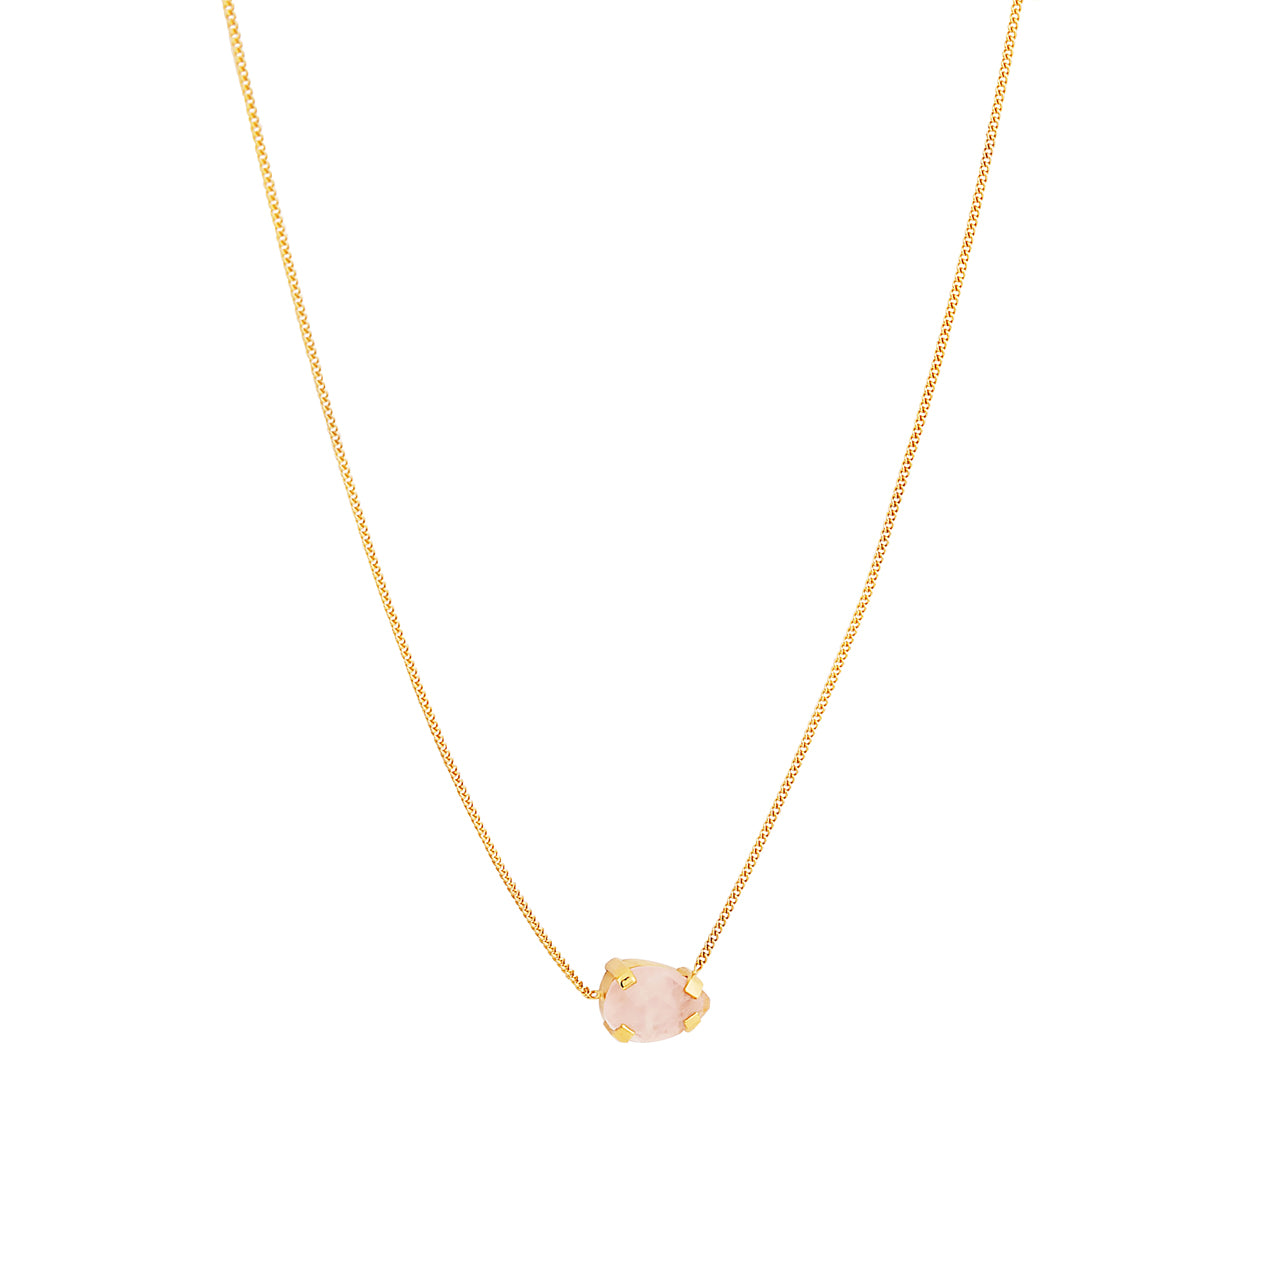 goldplated milestone necklace with rose quartz